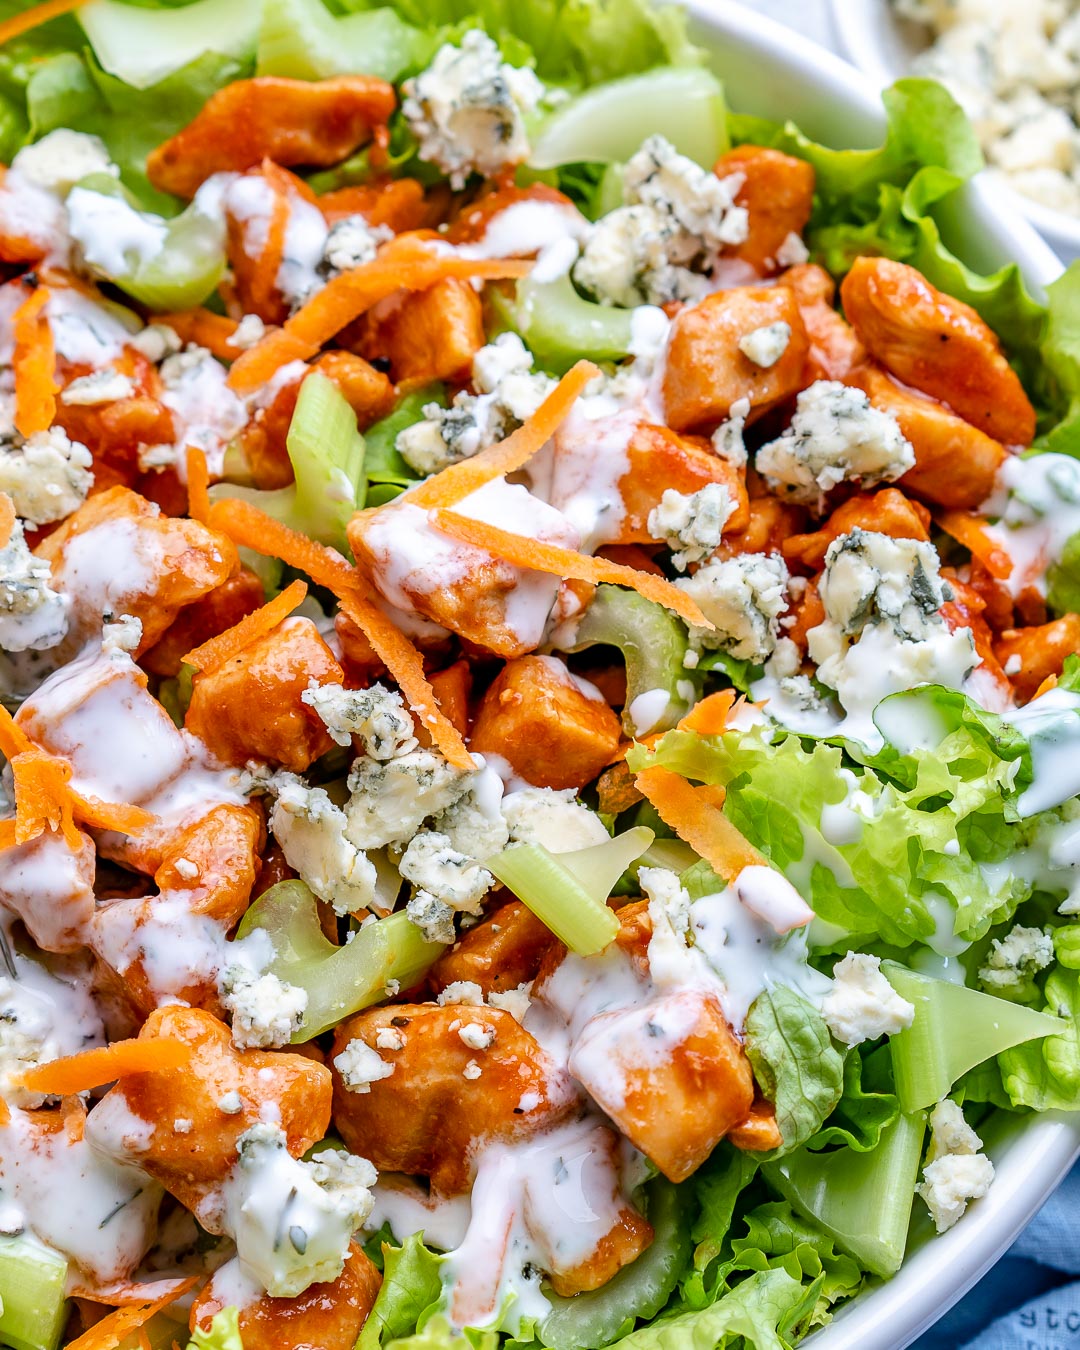 https://cleanfoodcrush.com/wp-content/uploads/2020/06/Clean-Food-Crush-Printable-Recipes-Buffalo-Chicken-Salad.jpg